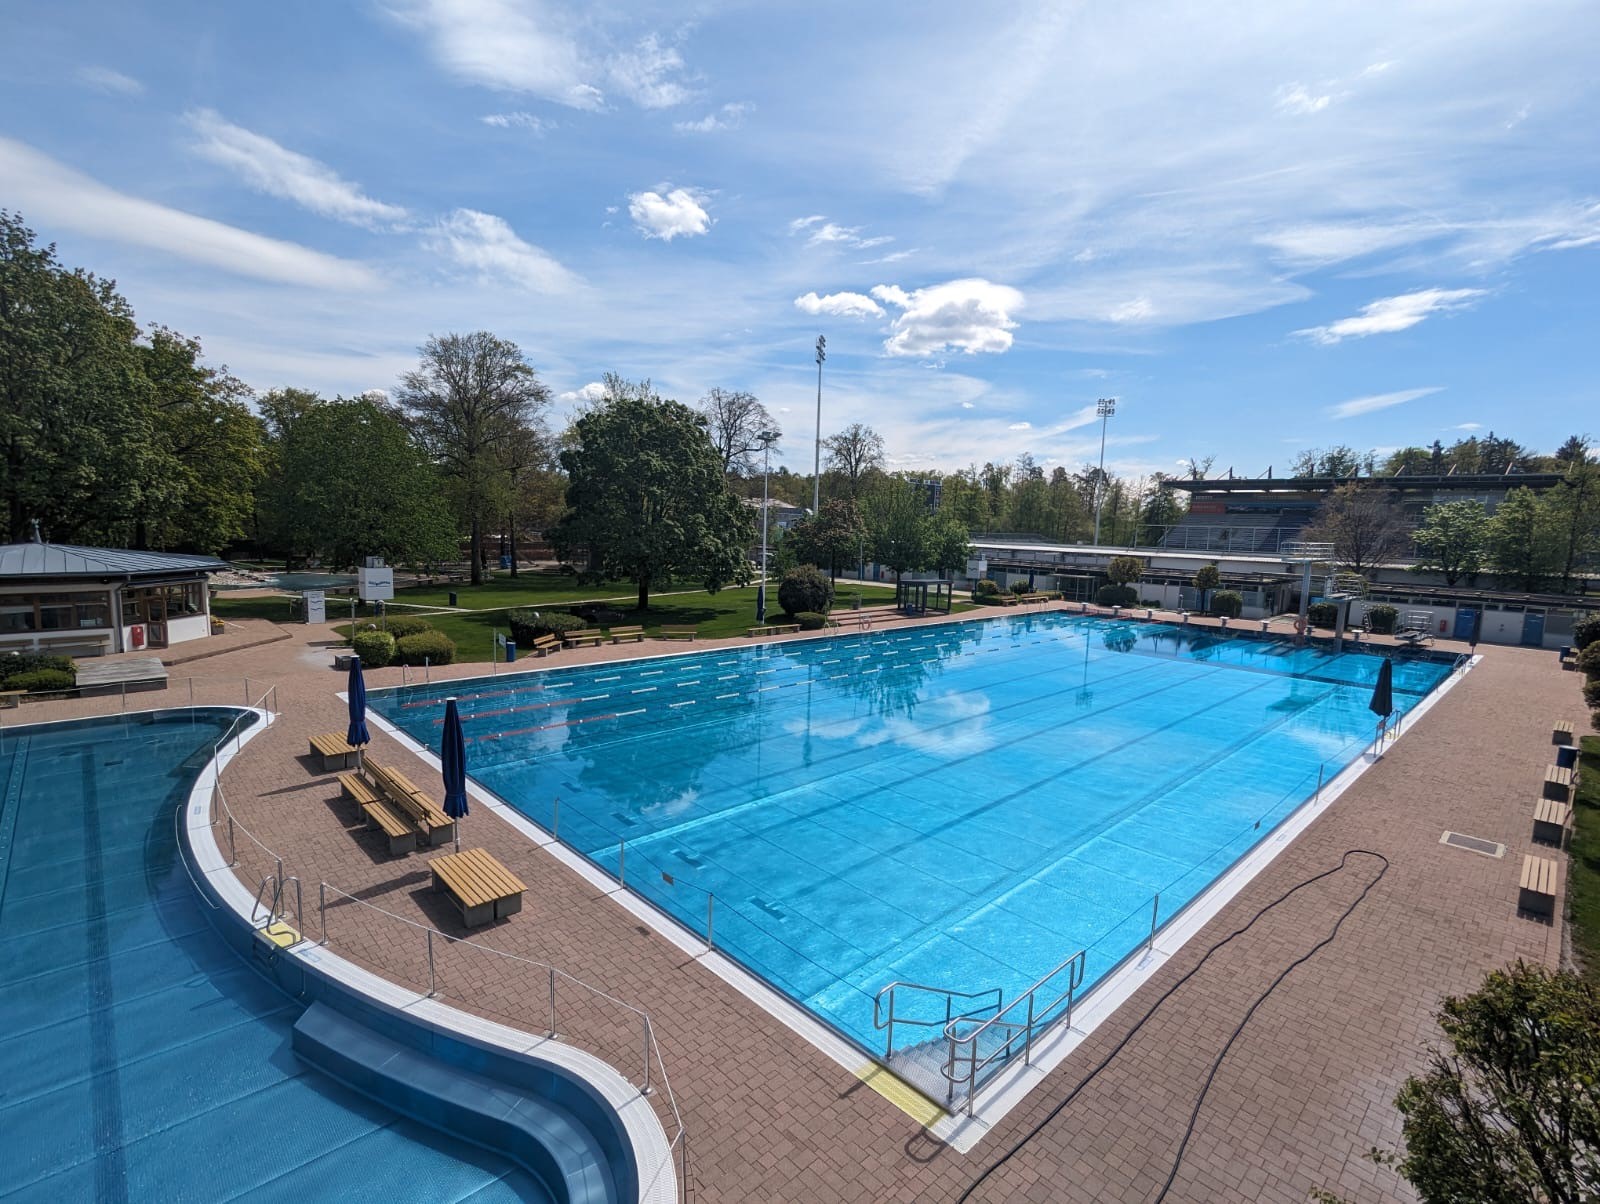 La piscina all'aperto di Burghausen apre lunedì 29 aprile 2024. © Bäder Burghausen